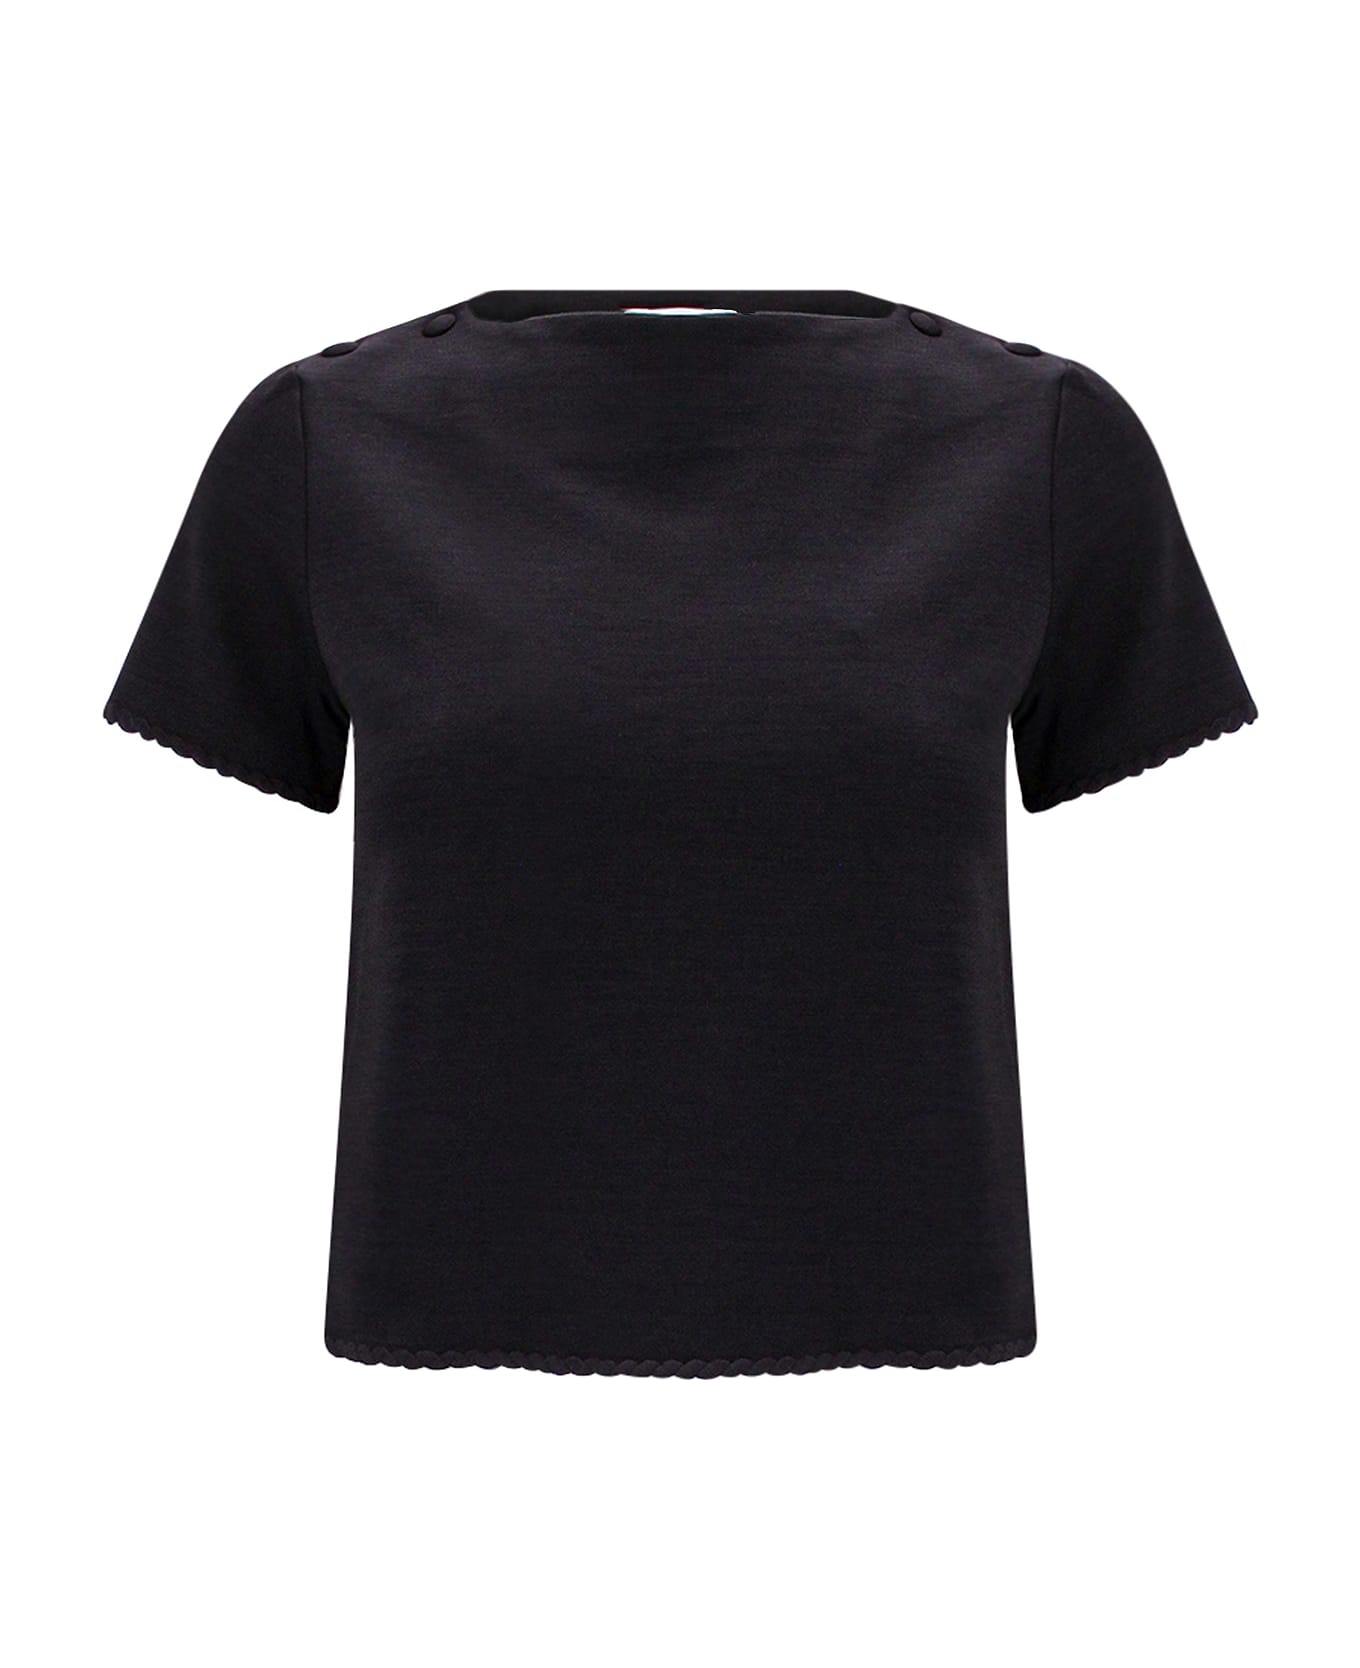 Thom Browne T-shirt - Black Tシャツ